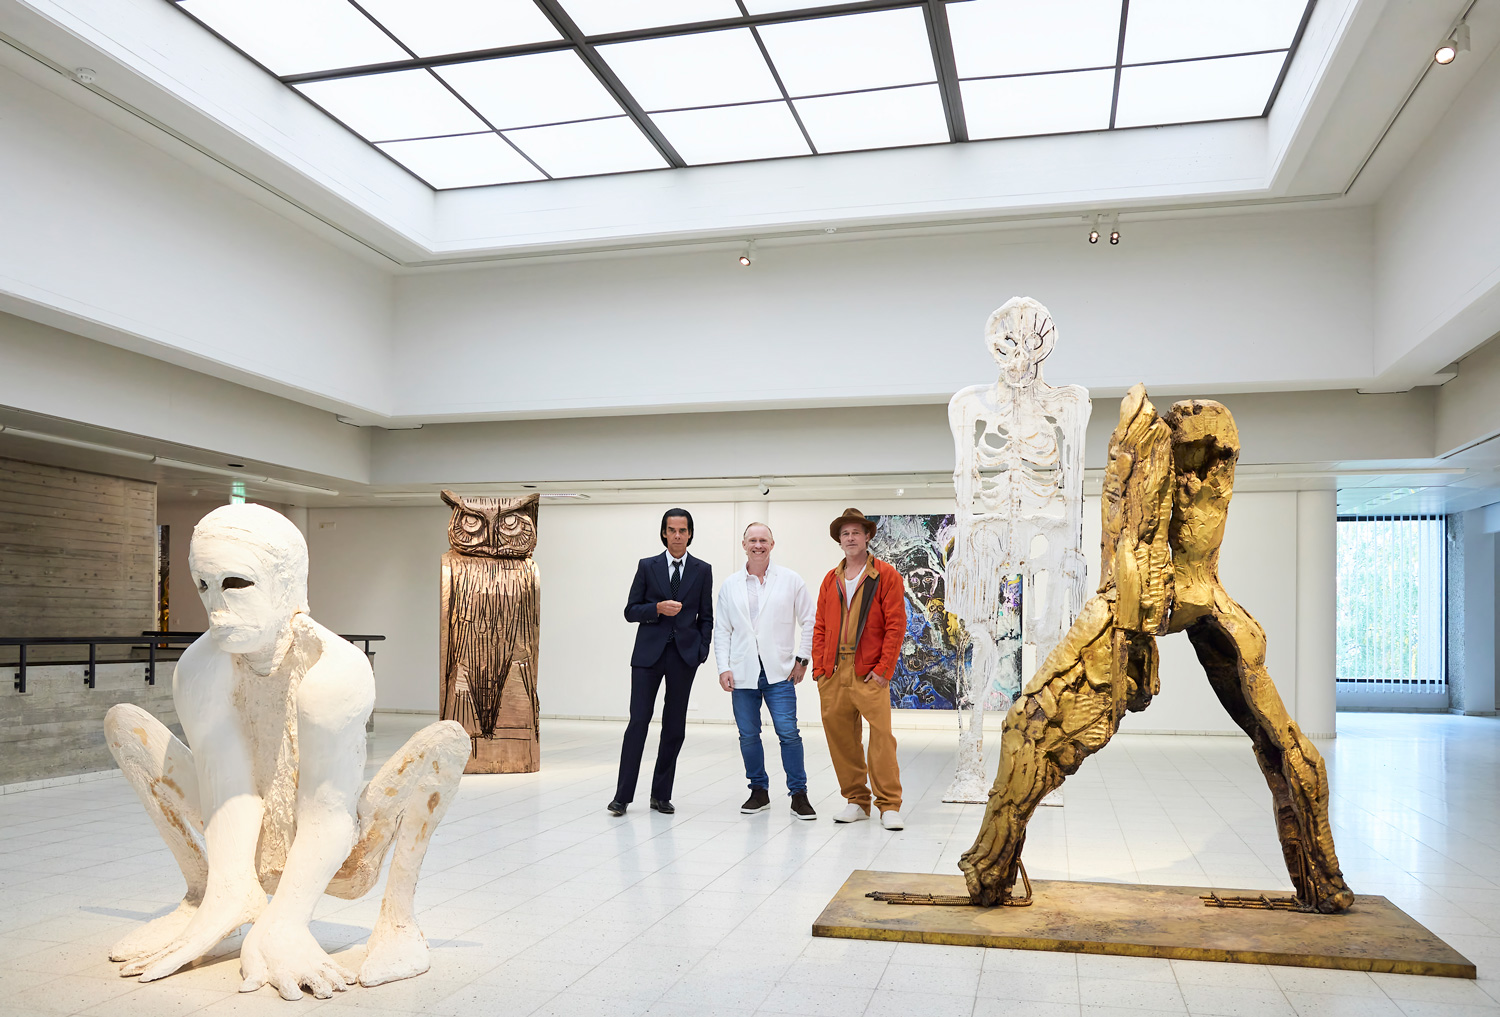 Brad Pitt makes surprise debut as a sculptor at Finland art gallery